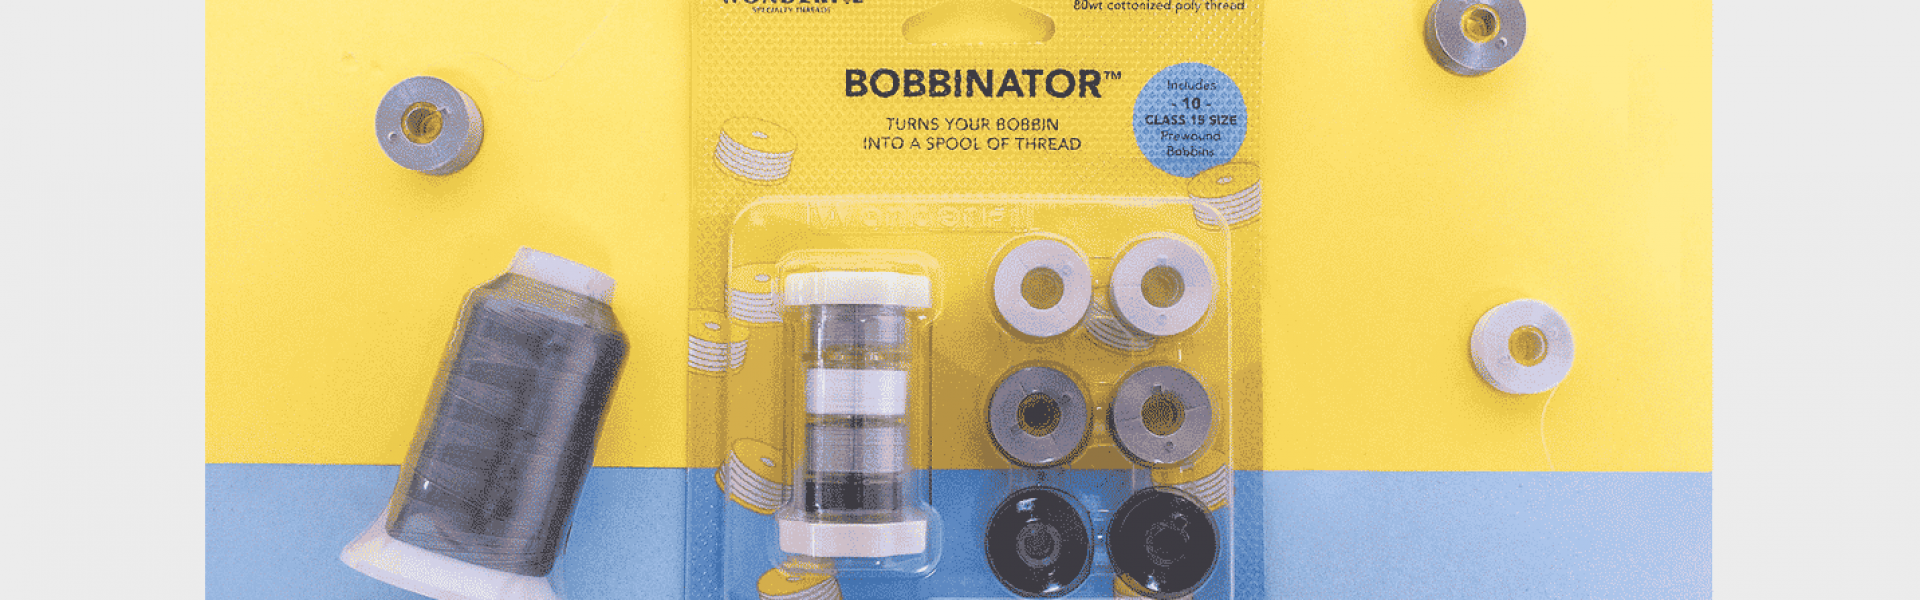 A photo of the Bobbinator sewing accessory.